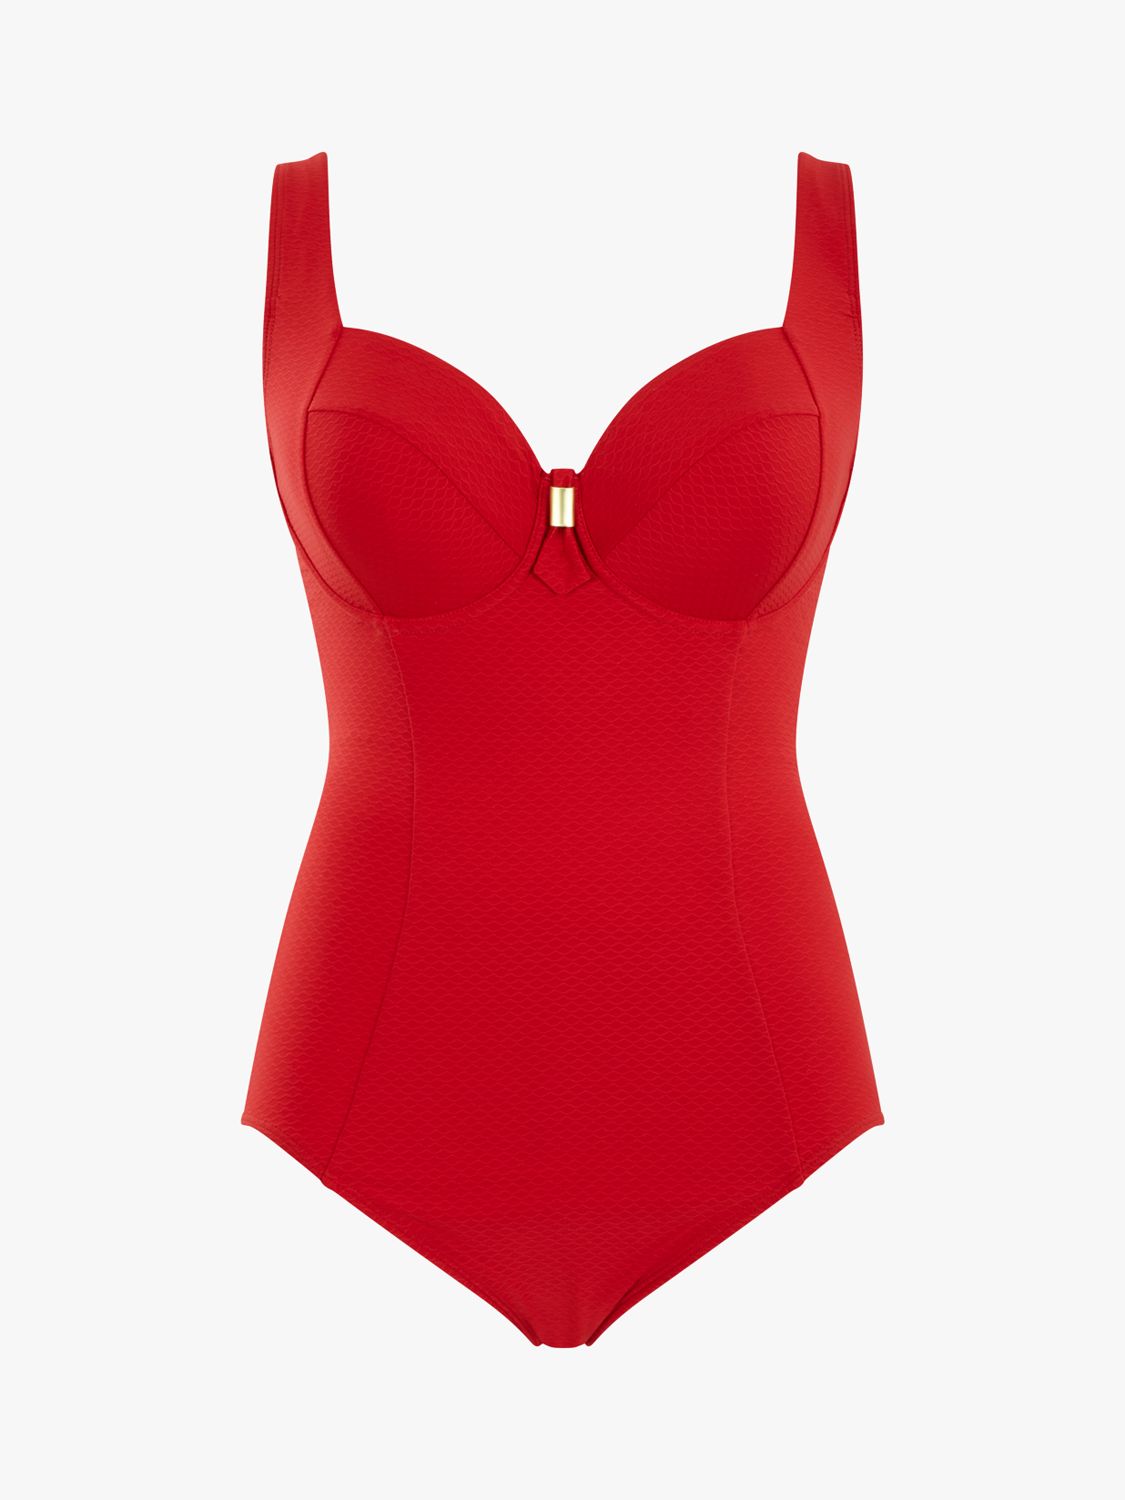 Panache Marianna Balconette Swimsuit, Crimson, 30G